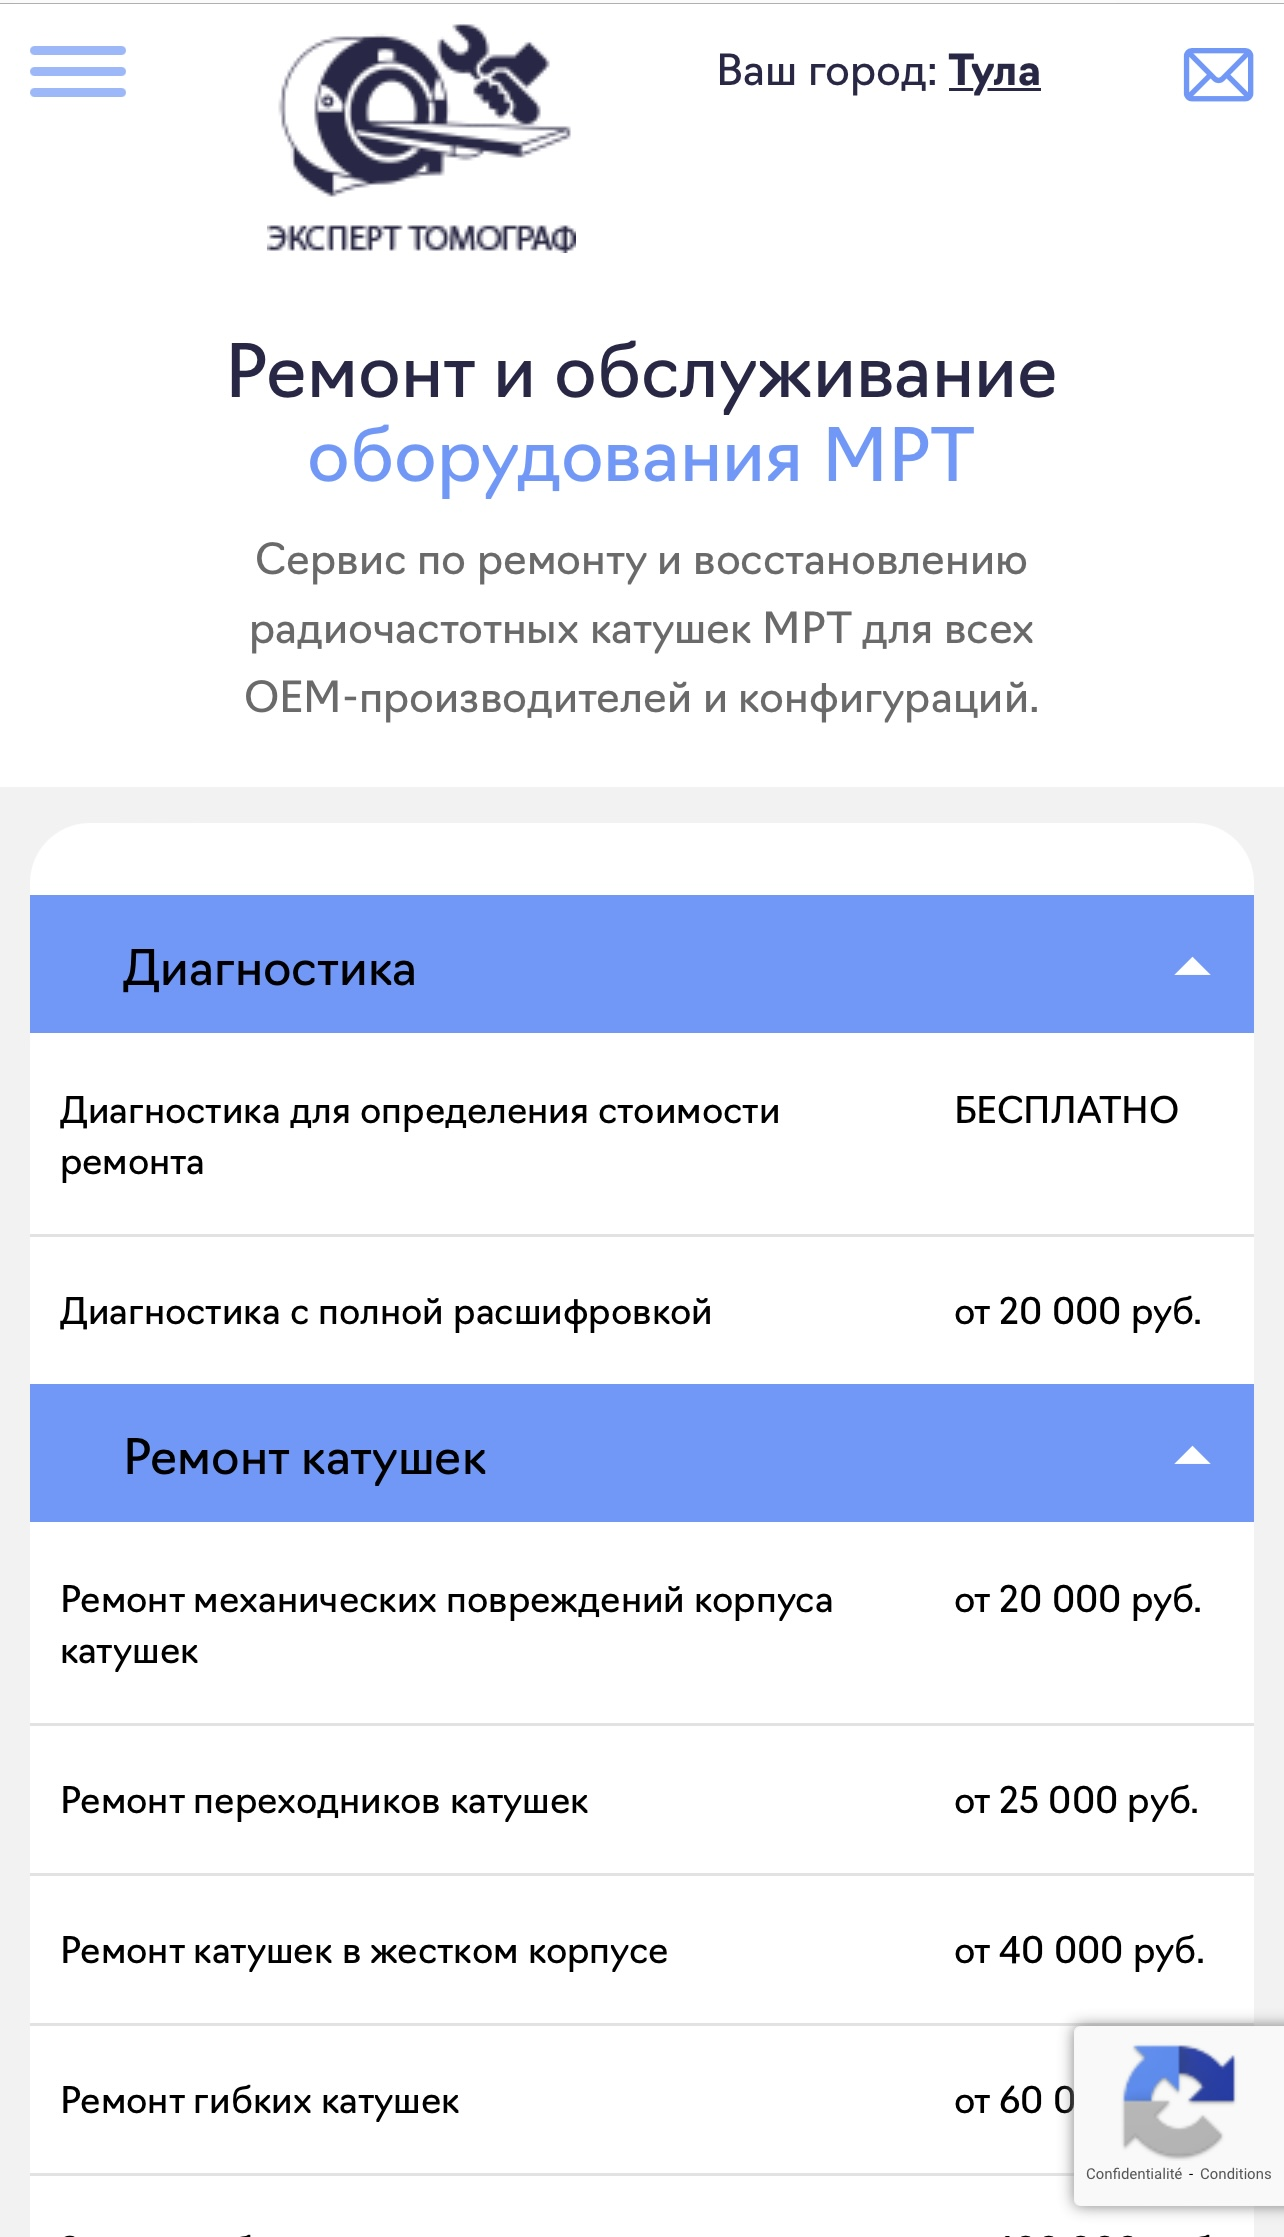 expert-tomograph.ru / Прайс